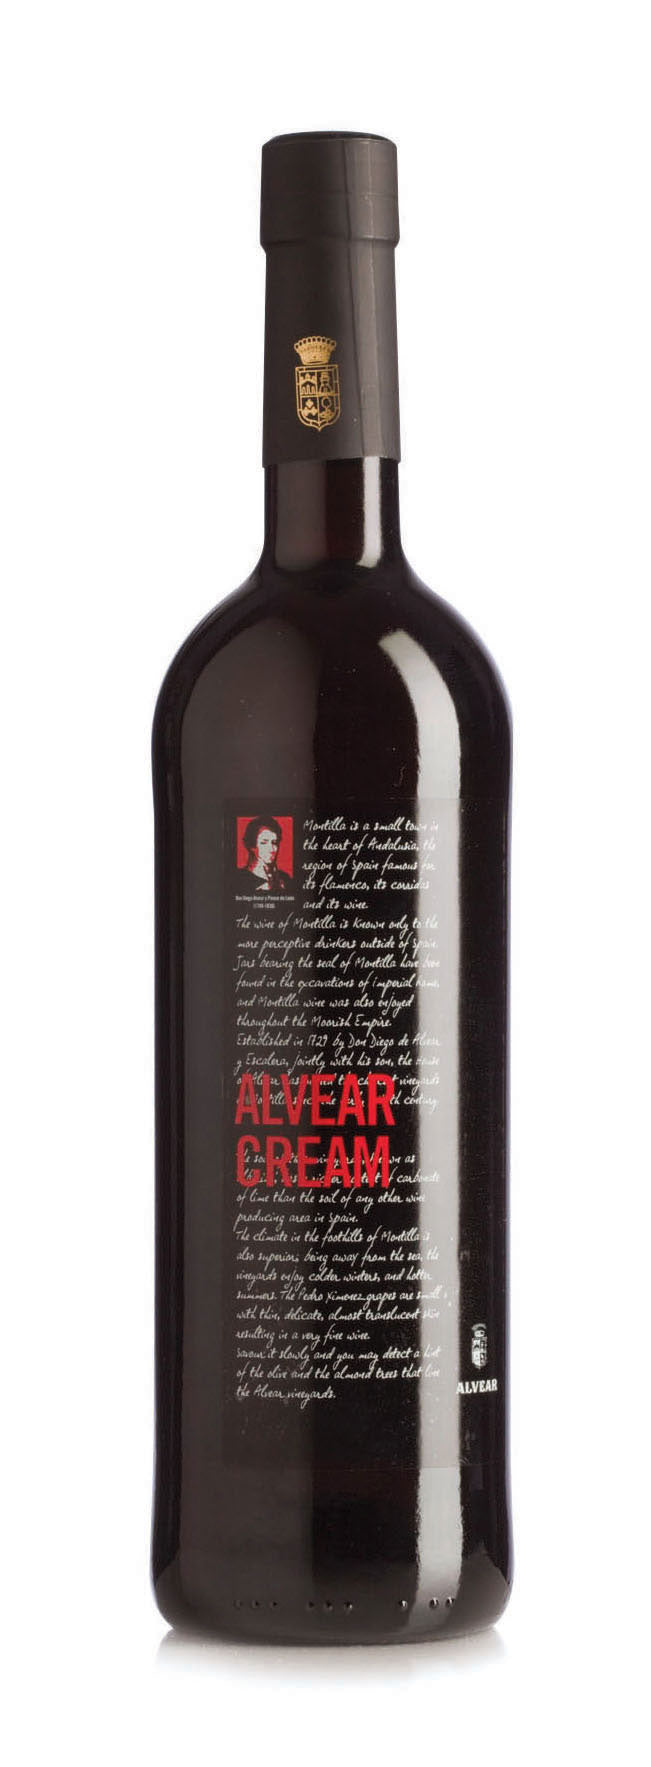 Alvear's Cream Montilla